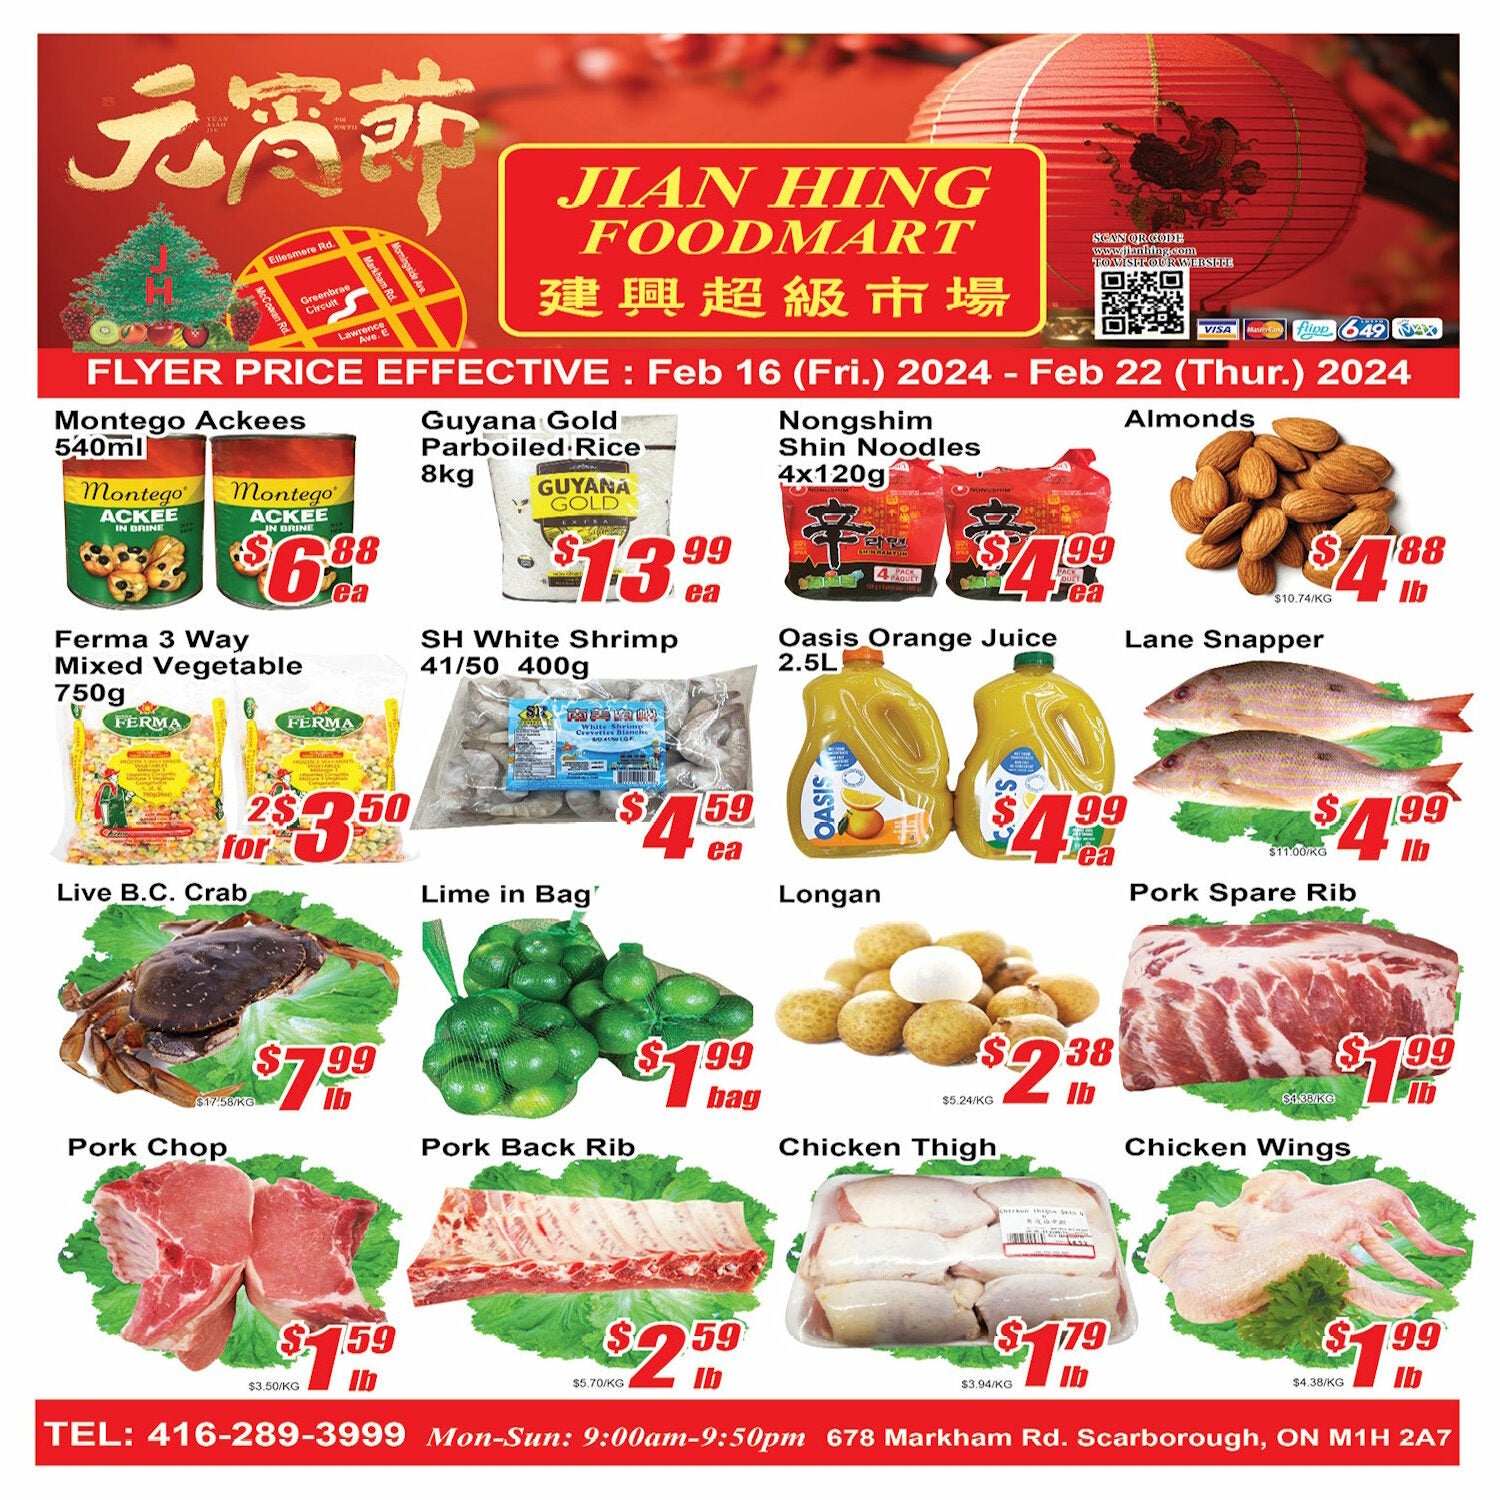 Jian Hing Weekly Flyer - Weekly Specials - Feb 16 – 22 - RedFlagDeals.com